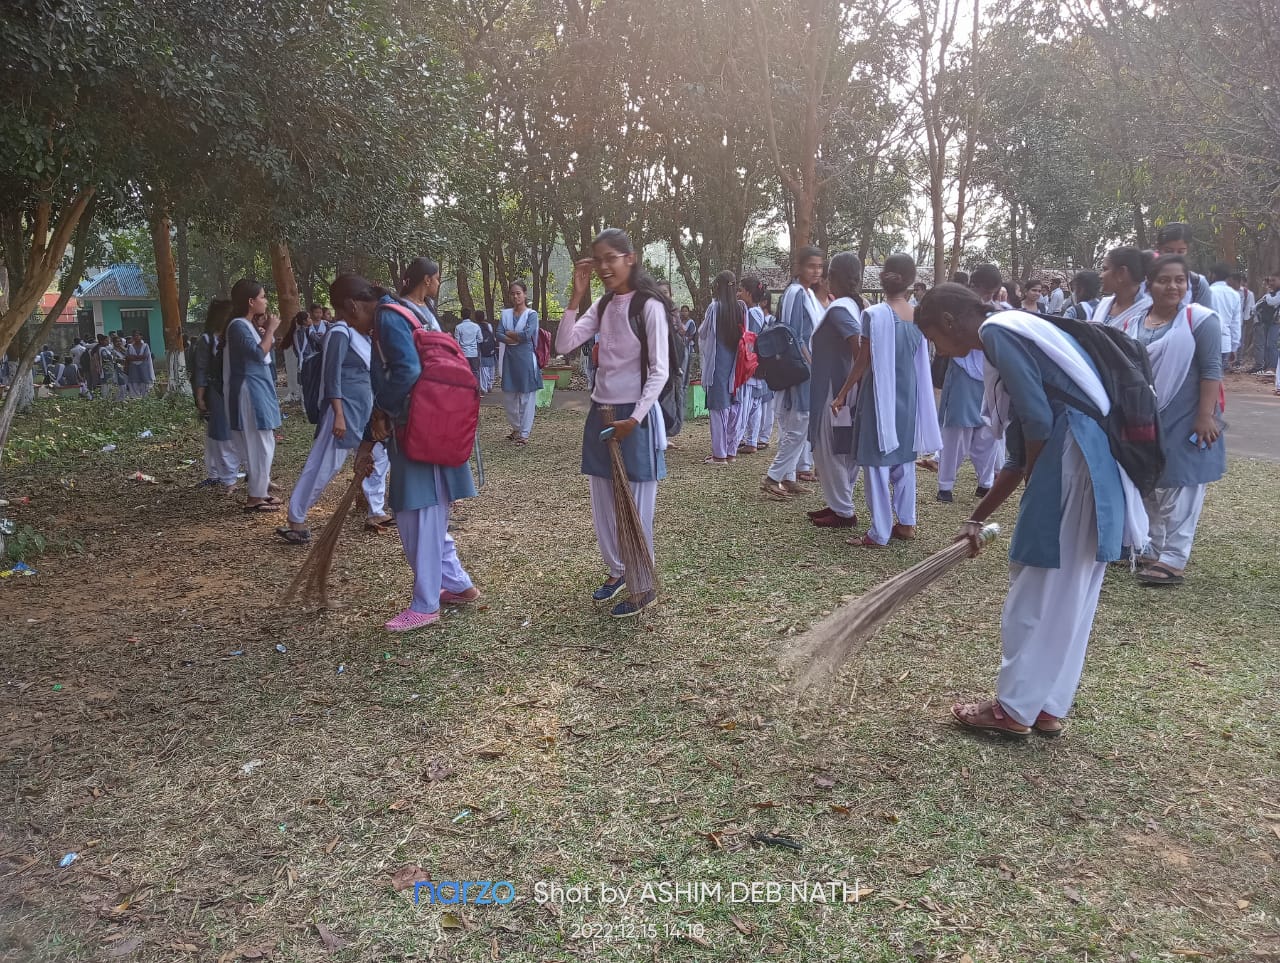 Michael Madhusudan Dutta College, Sabroom South Tripura, Photo Galleruy